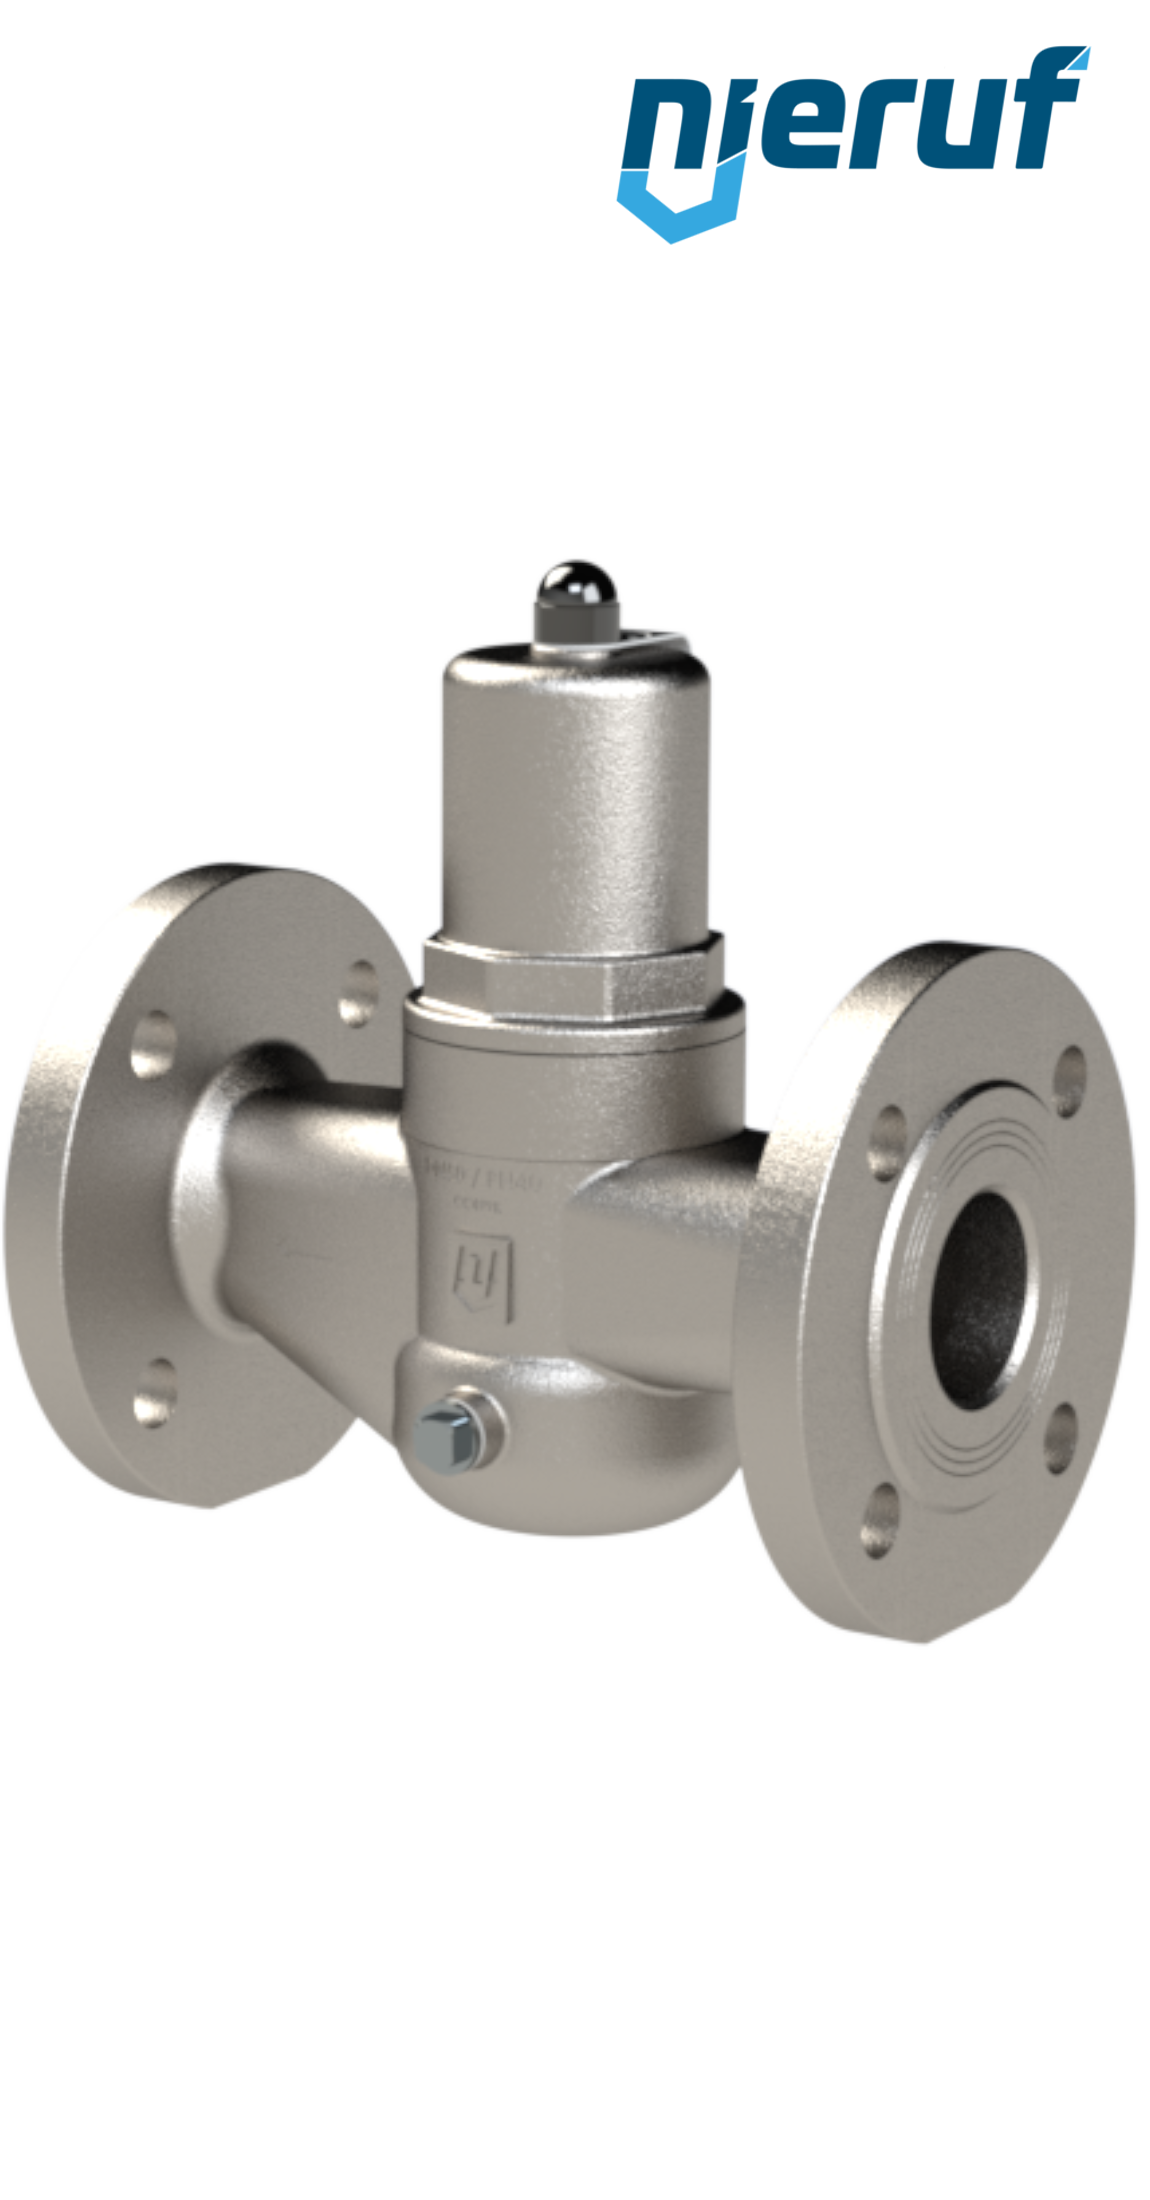 Flange-pressure reducing valve DN 25 PN40 DM08 stainless steel FKM 5.0 - 15.0 bar